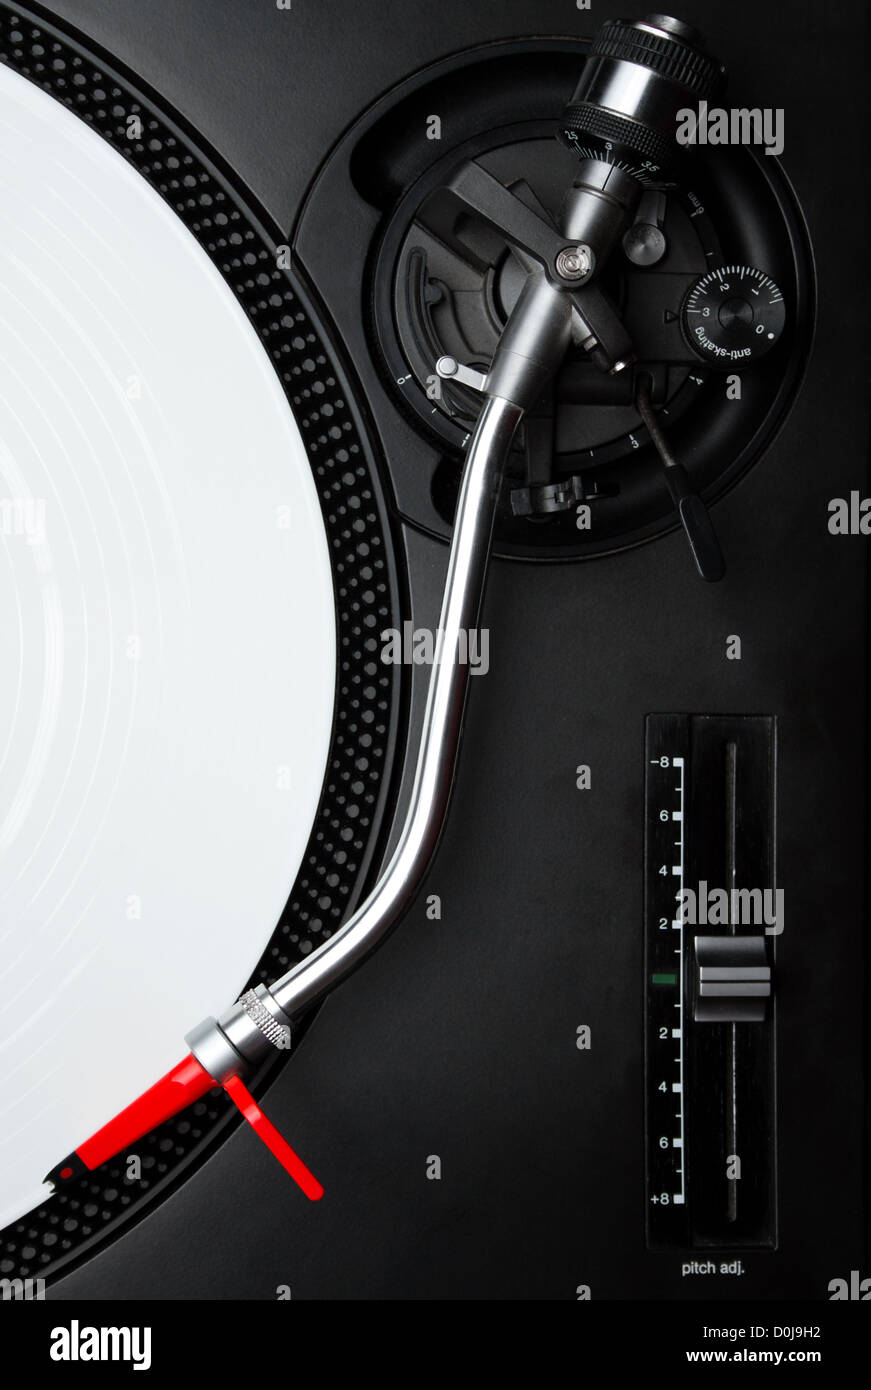 Professional DJ audio equipment - turntable needle on white vinyl record shot from above Stock Photo